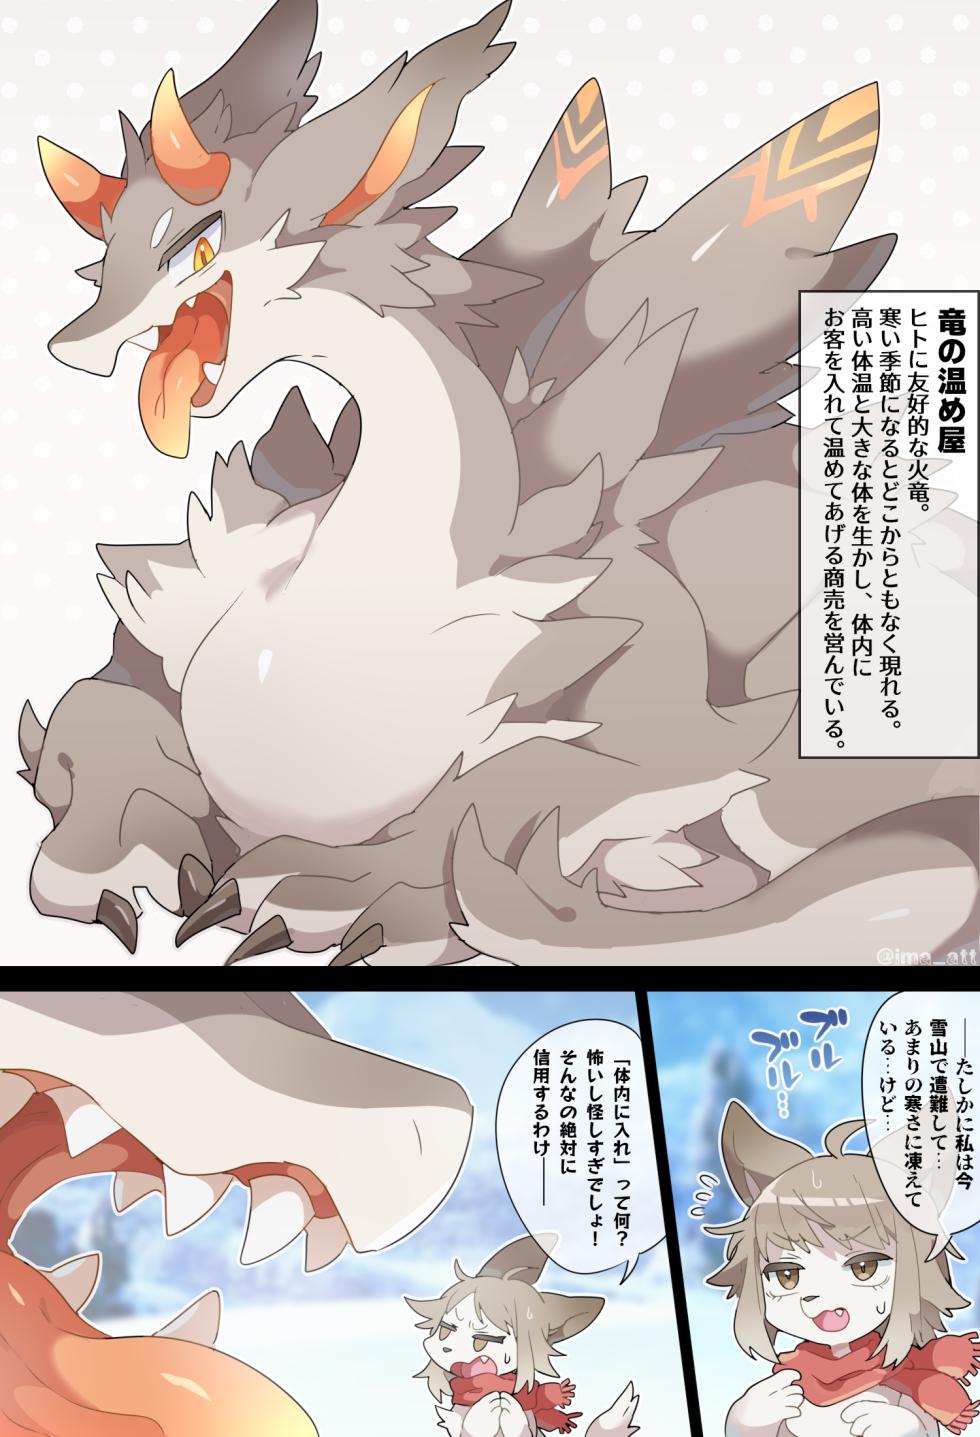 [imaat] Hot Dragon VORE [English / Japanese] - Page 8